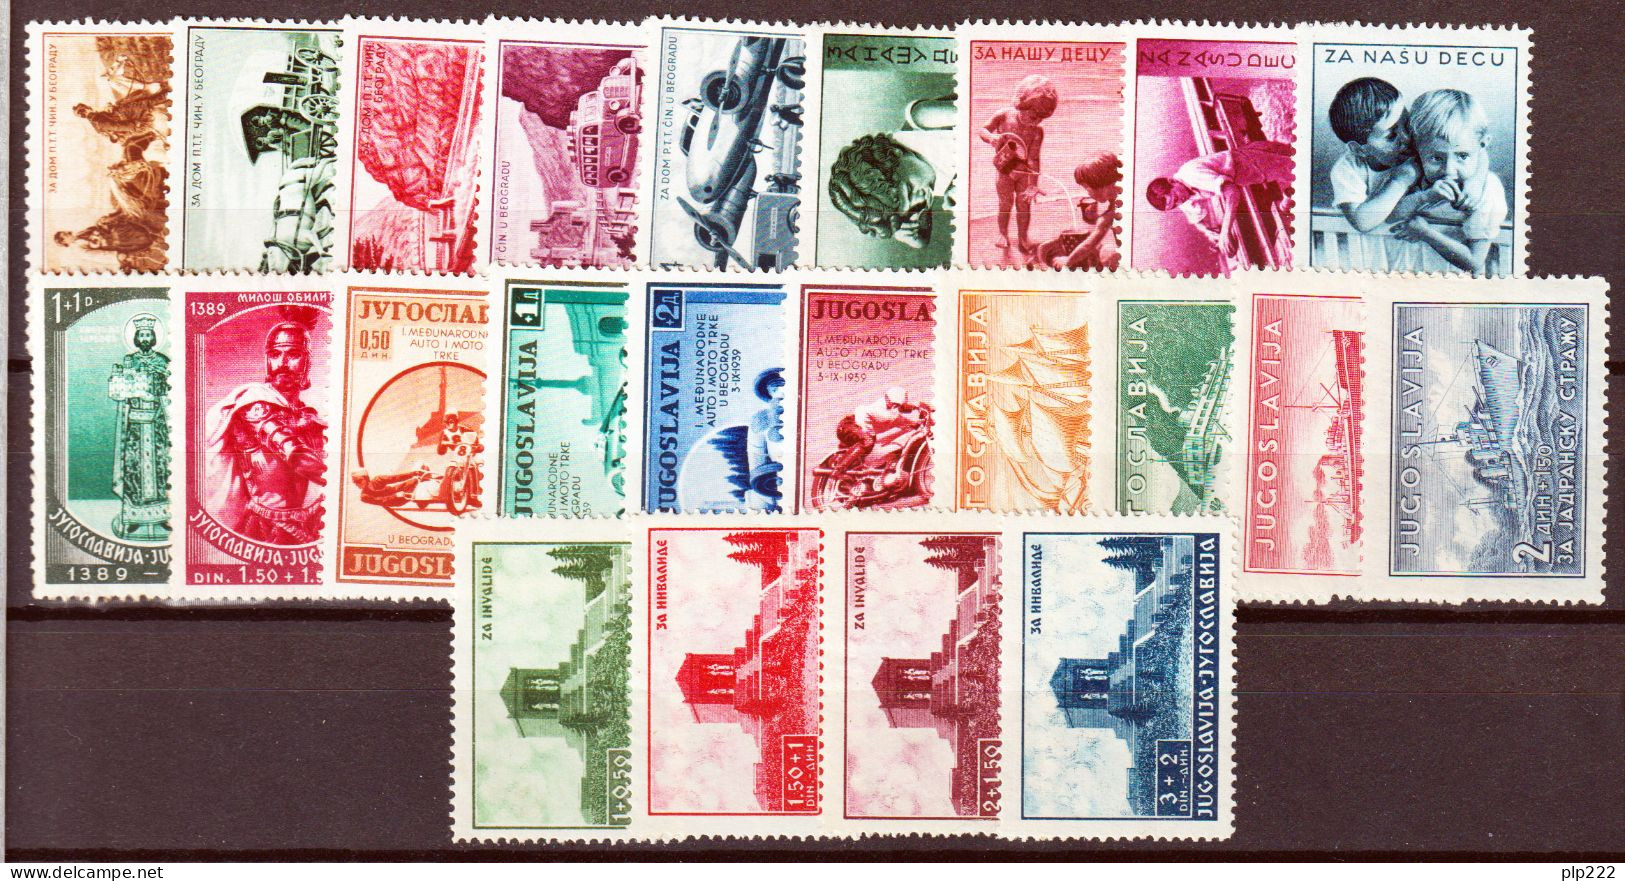 Jugoslavia 1939 Annata Completa Commemorativi / Complete Year Set Commemoratives **/MNH VF/F - Années Complètes